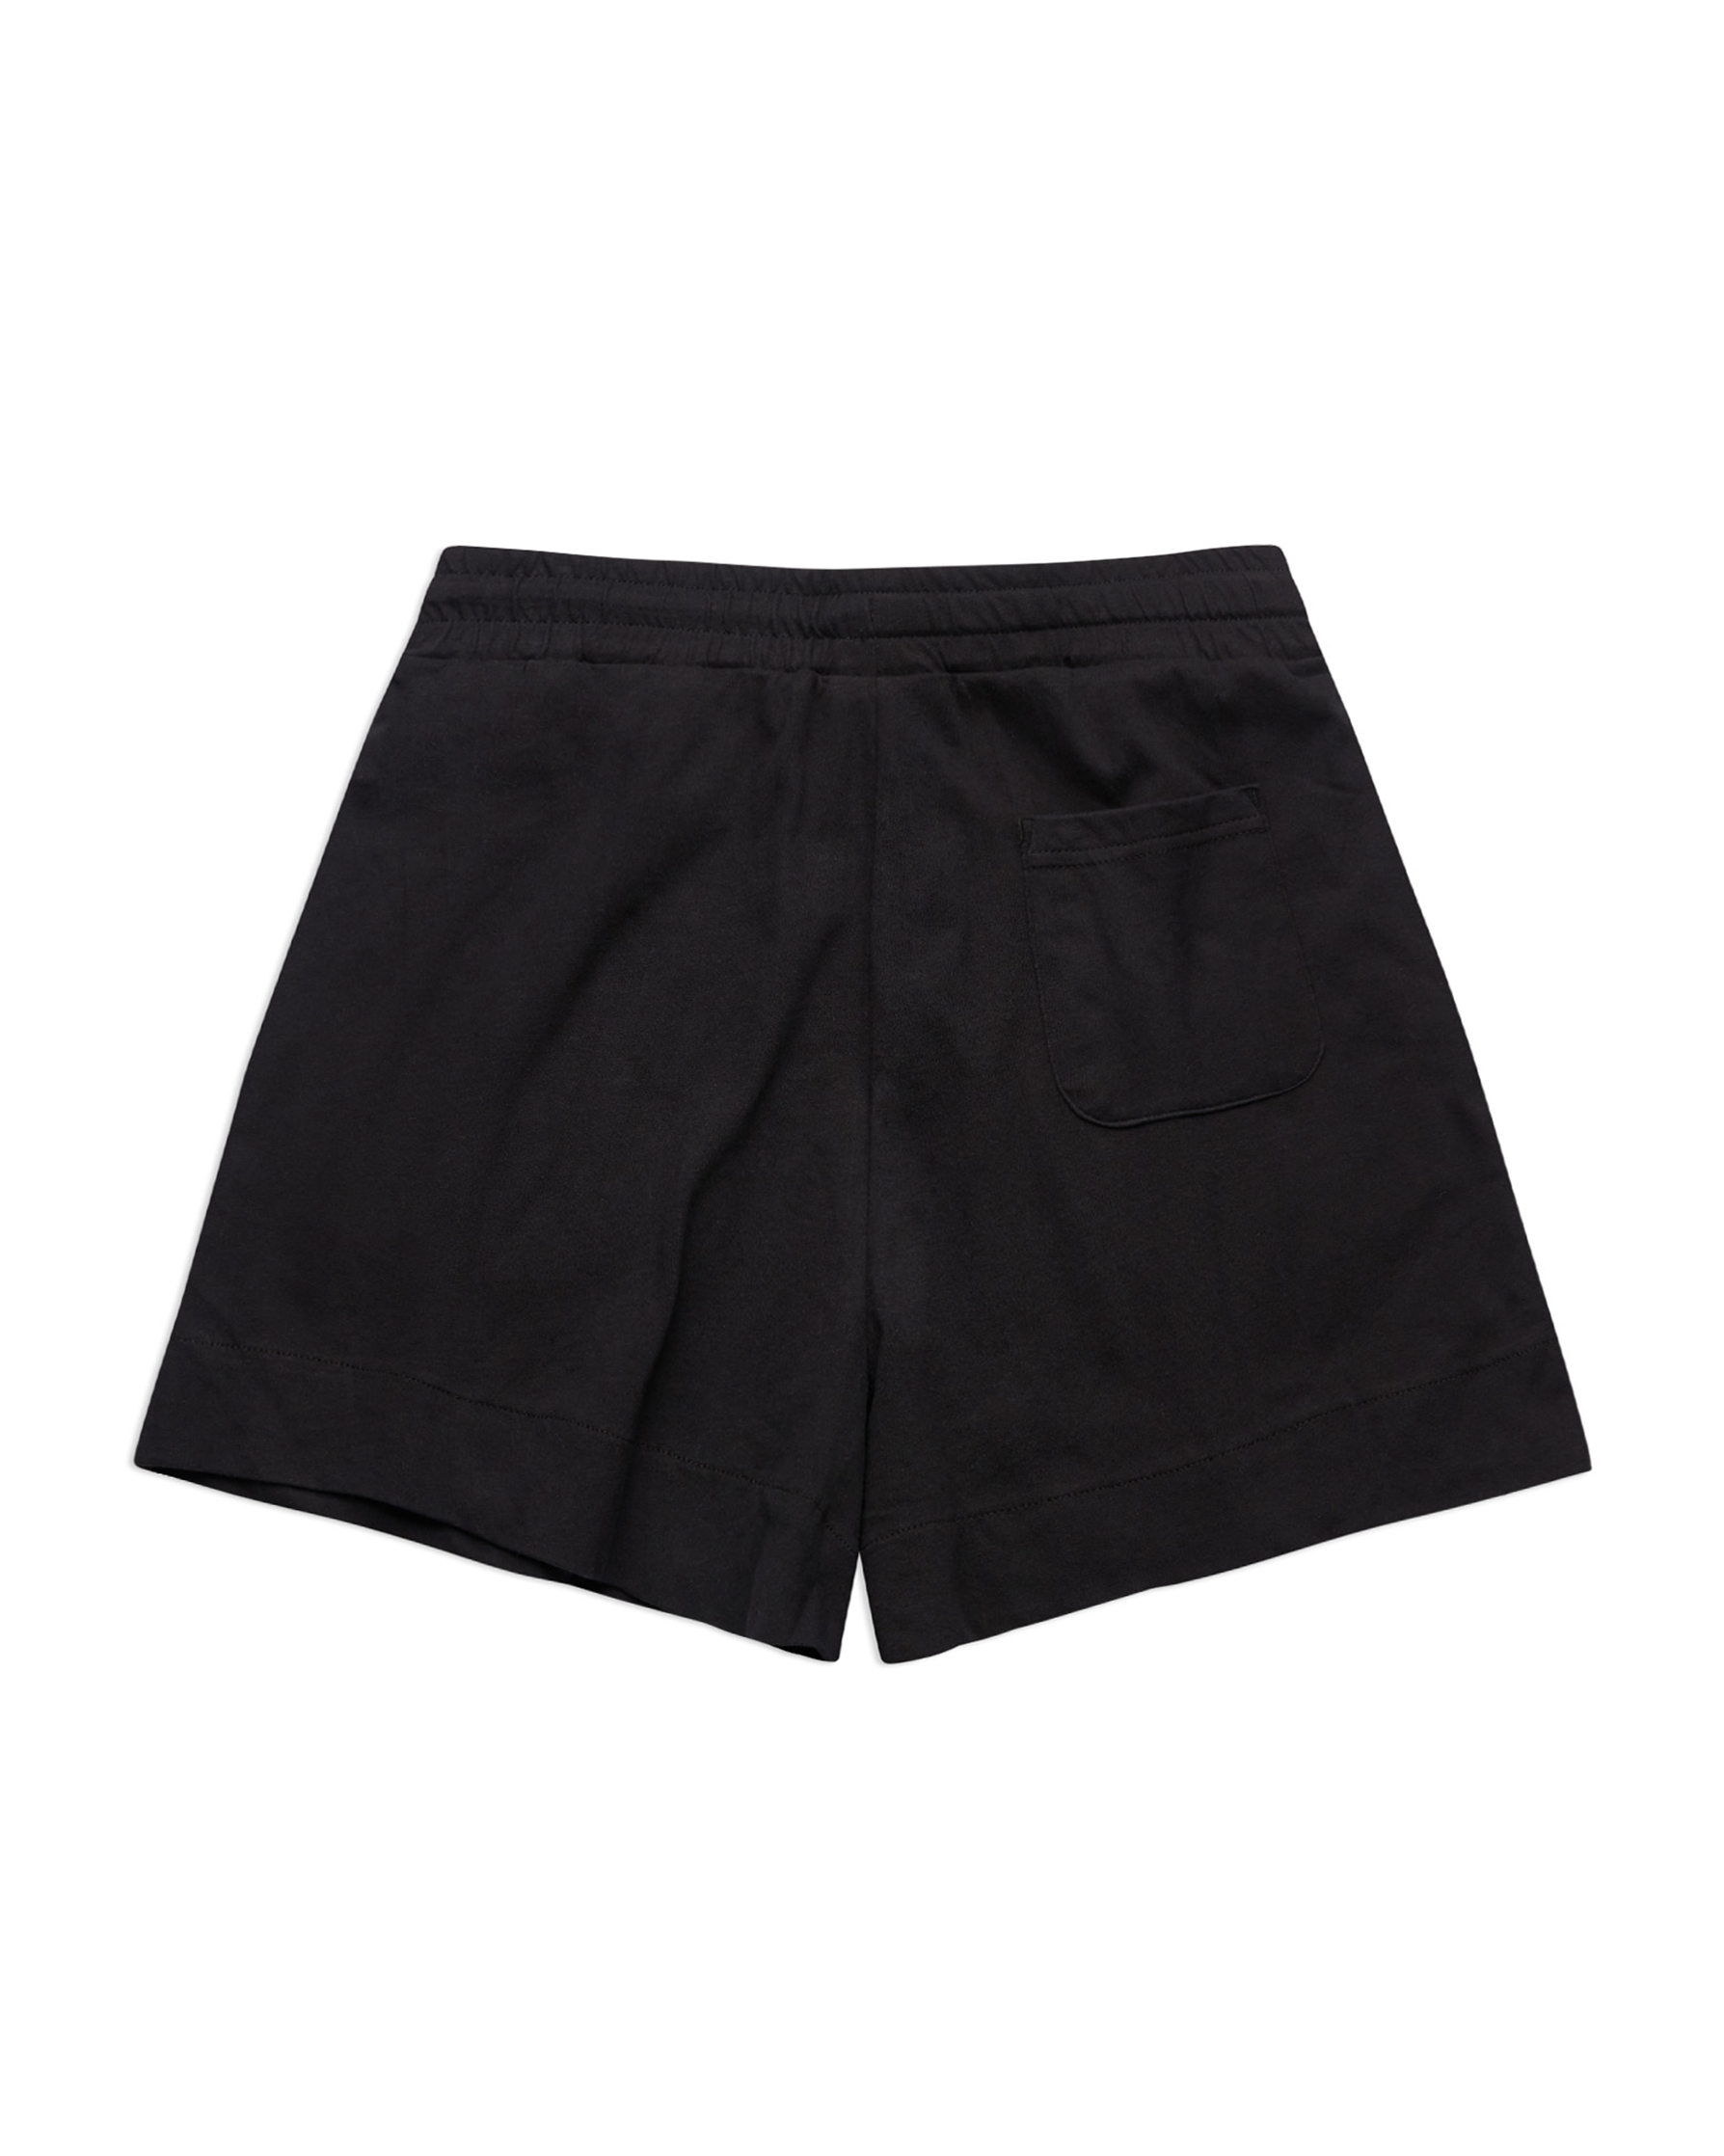 Herbgal Monochrome Shorts - Black/White